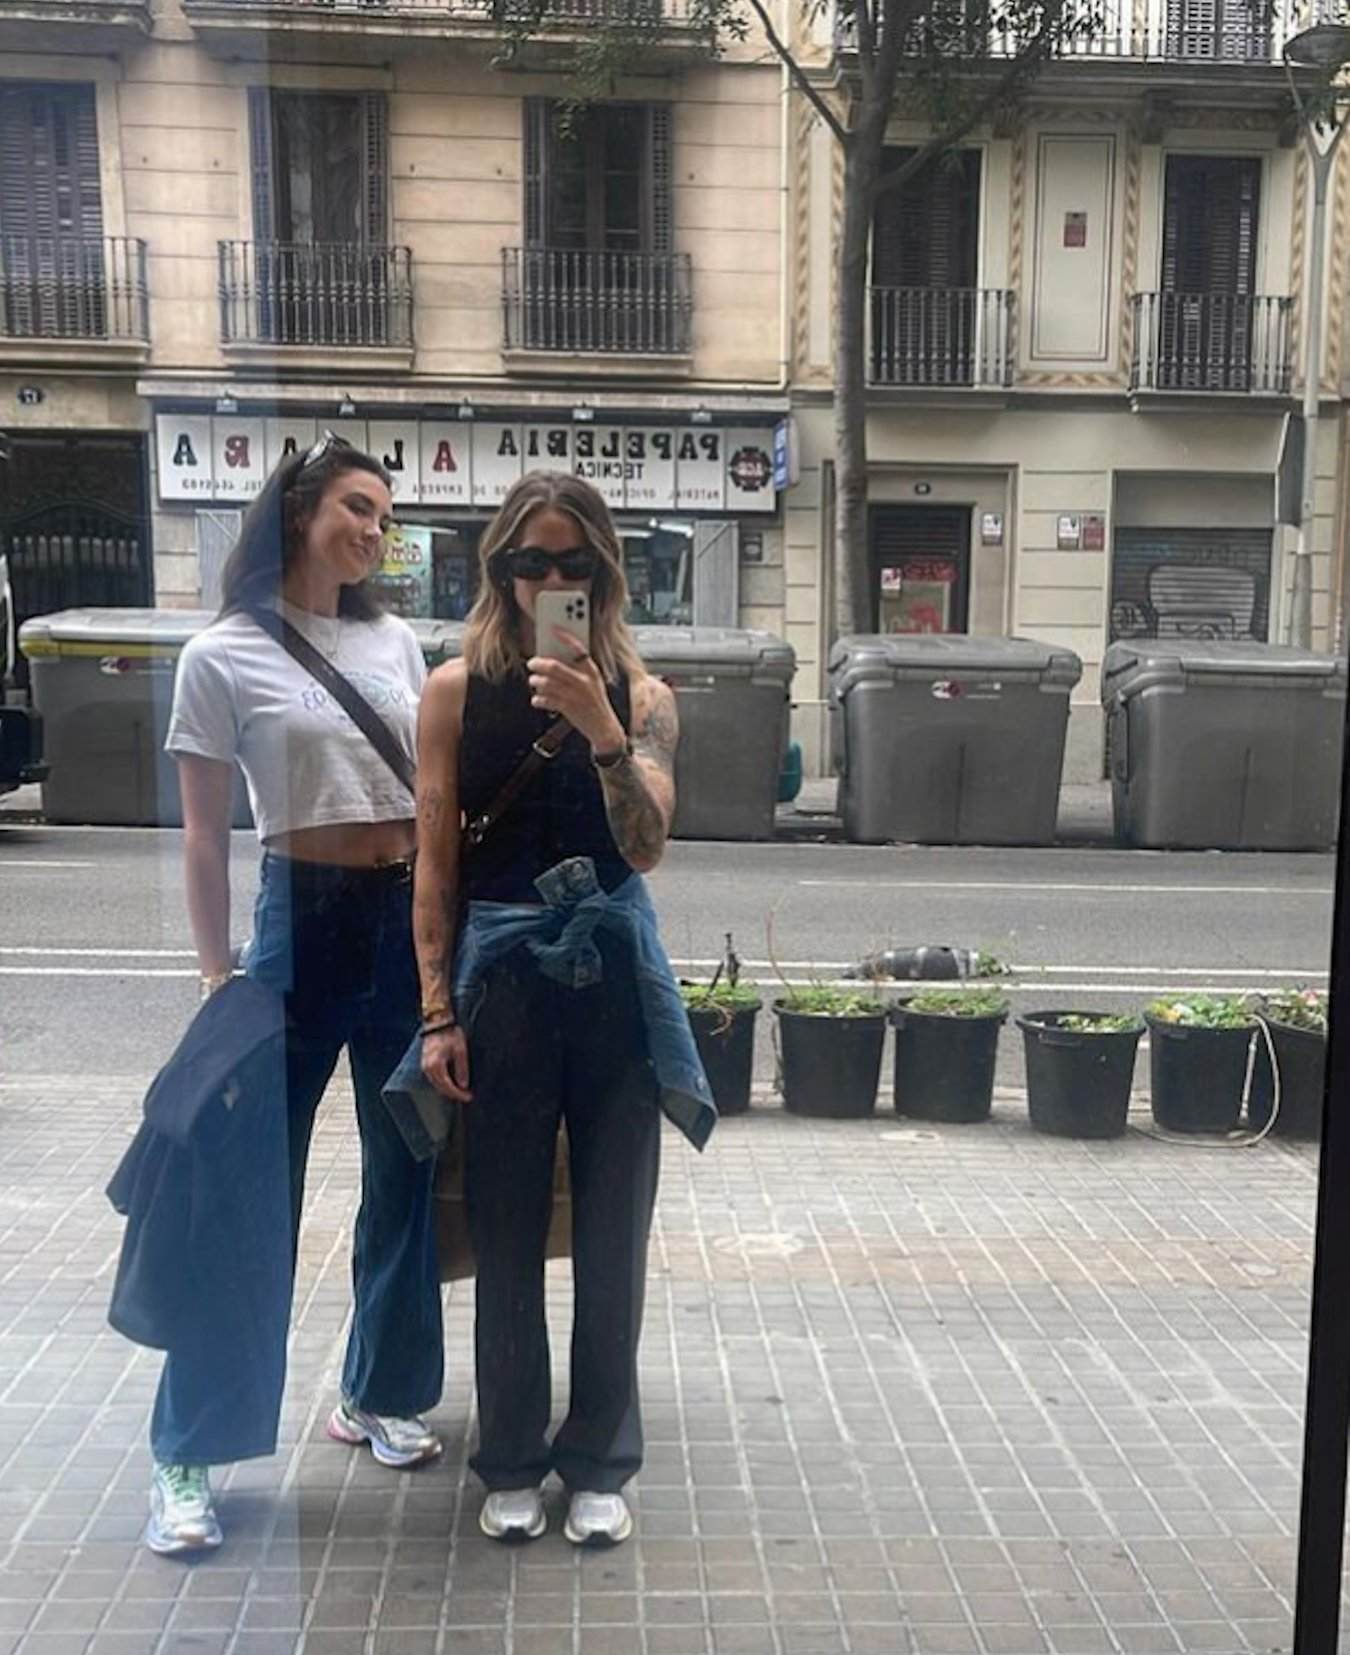 Mapi León i Ingrid Engen, ferides de guerra al centre de Barcelona, "my panda"